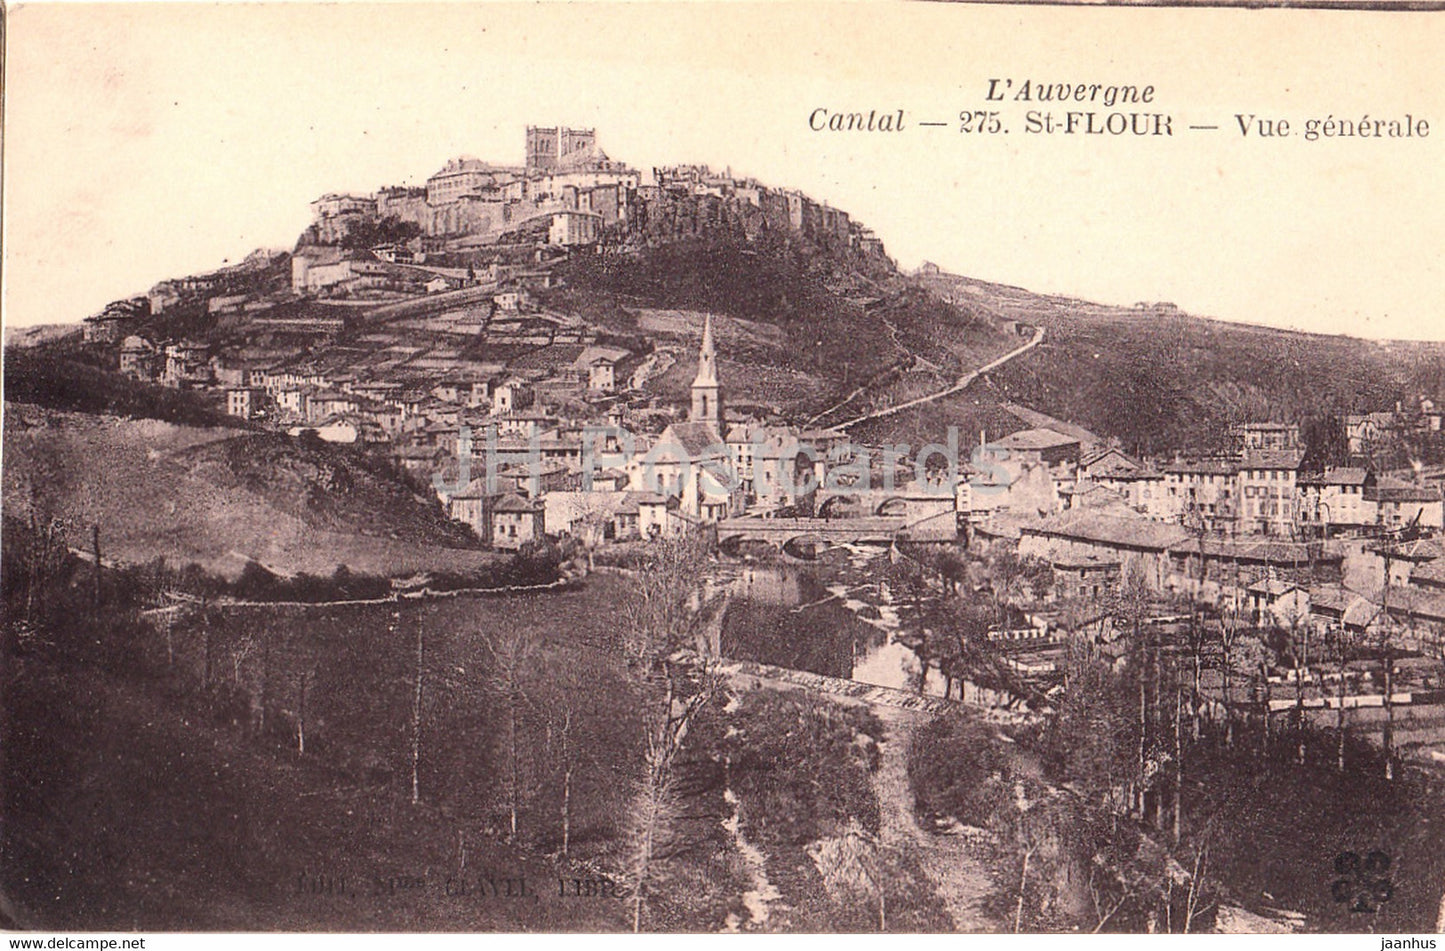 L'Auvergne - Cantal - St Flour - Vue Generale - 275 - old postcard - France - unused - JH Postcards